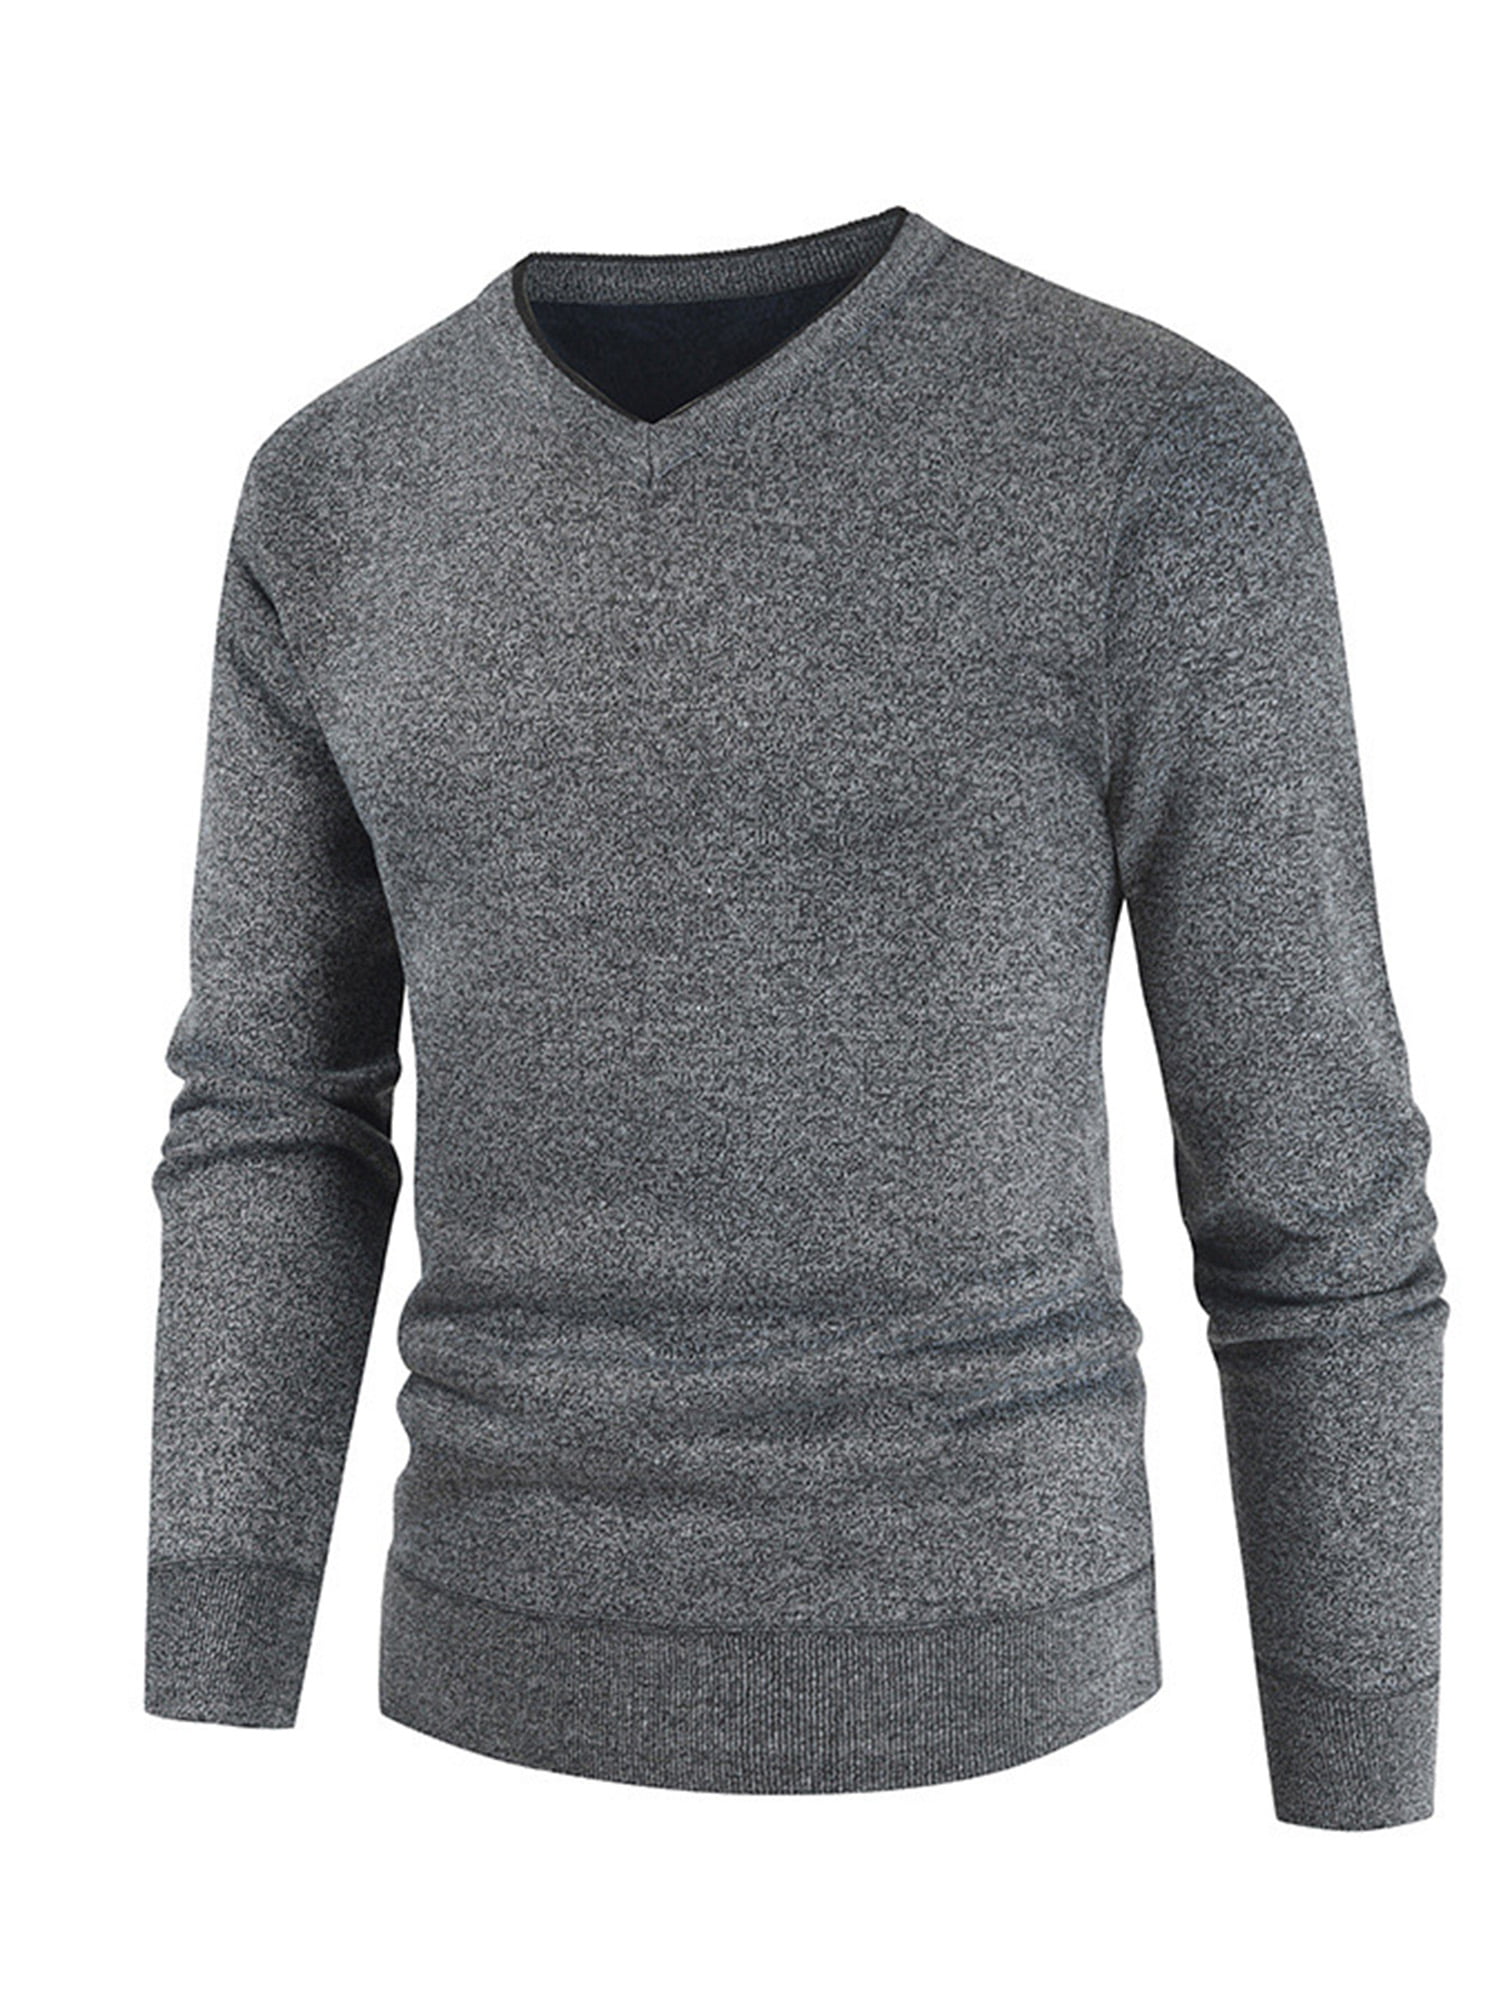 Mens Long Sleeve Ribbed V Neck Plain Knit Winter Sweater Pullover Jumper Top 